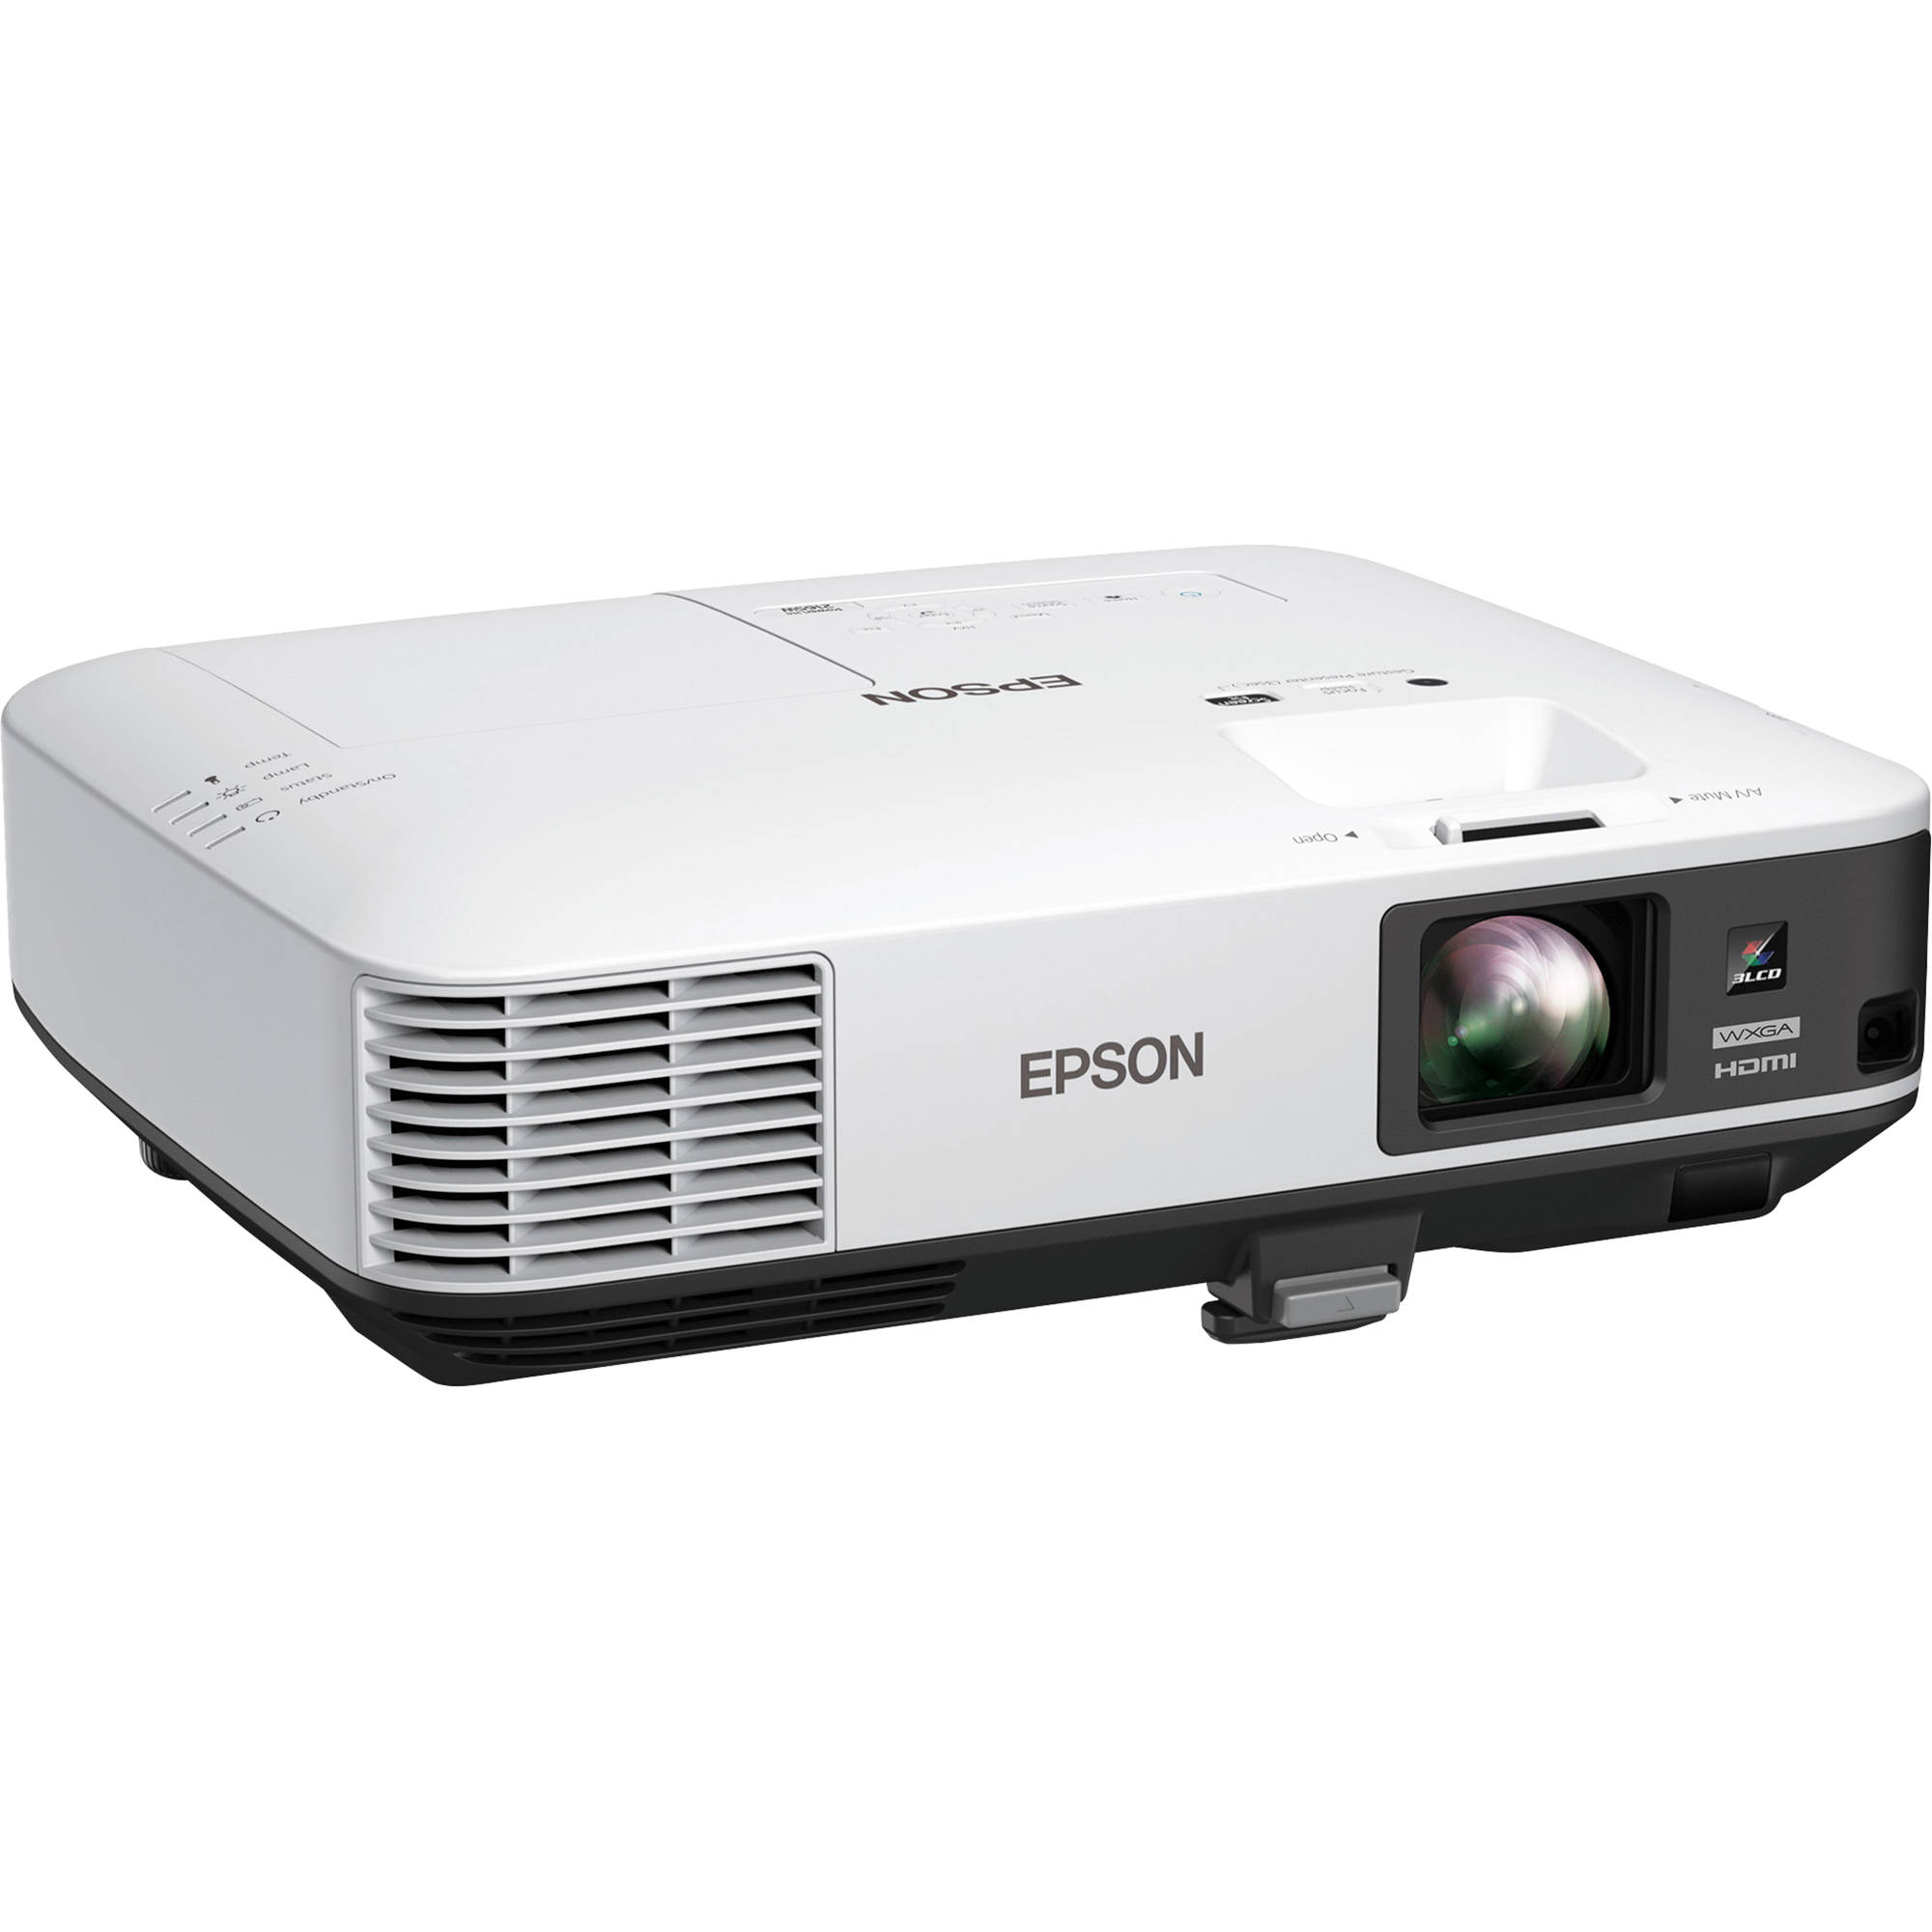 EPSON　プロジェクター　EB-2247U 美品　ランプ時間1233H色再現性10億7000万色